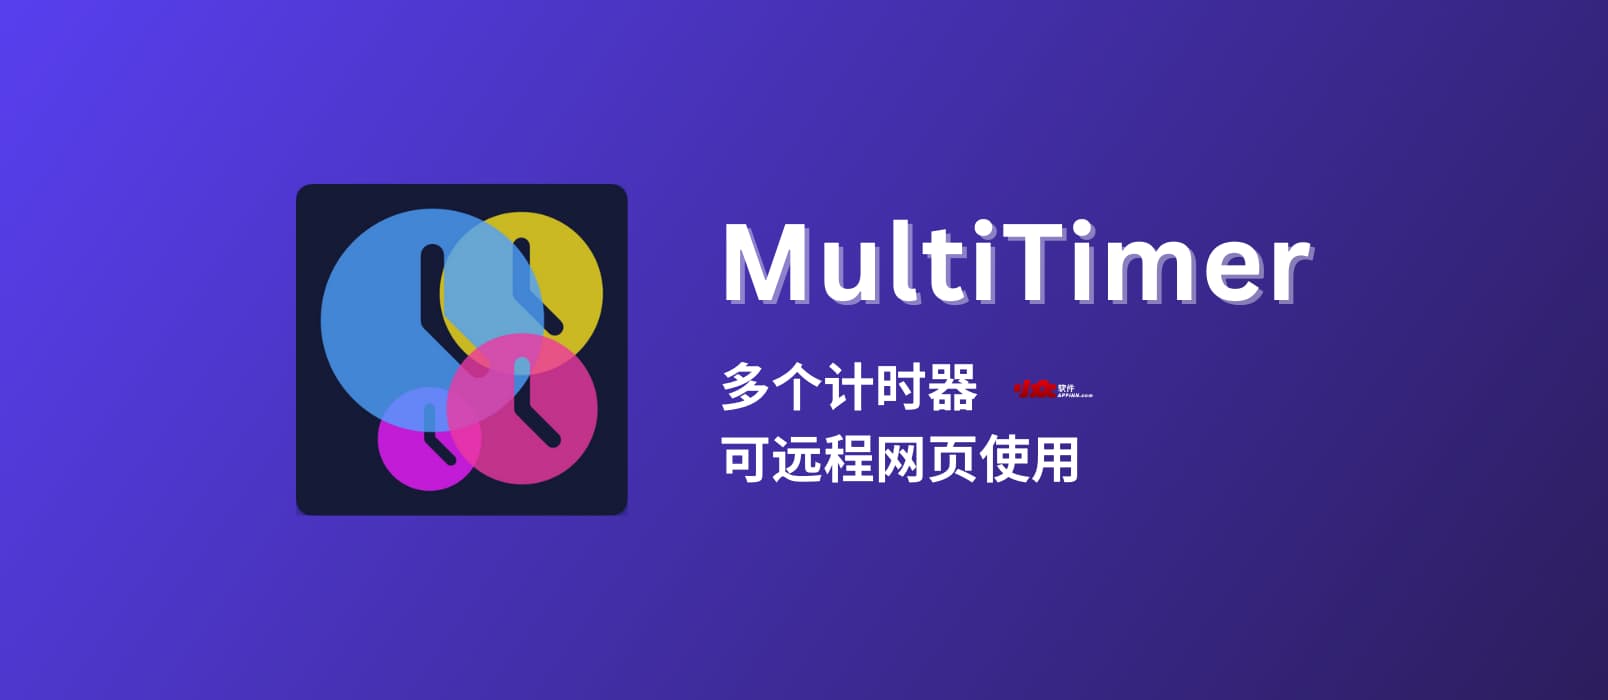 MultiTimer - 同时启动 12+ 个计时器，可远程网页调用